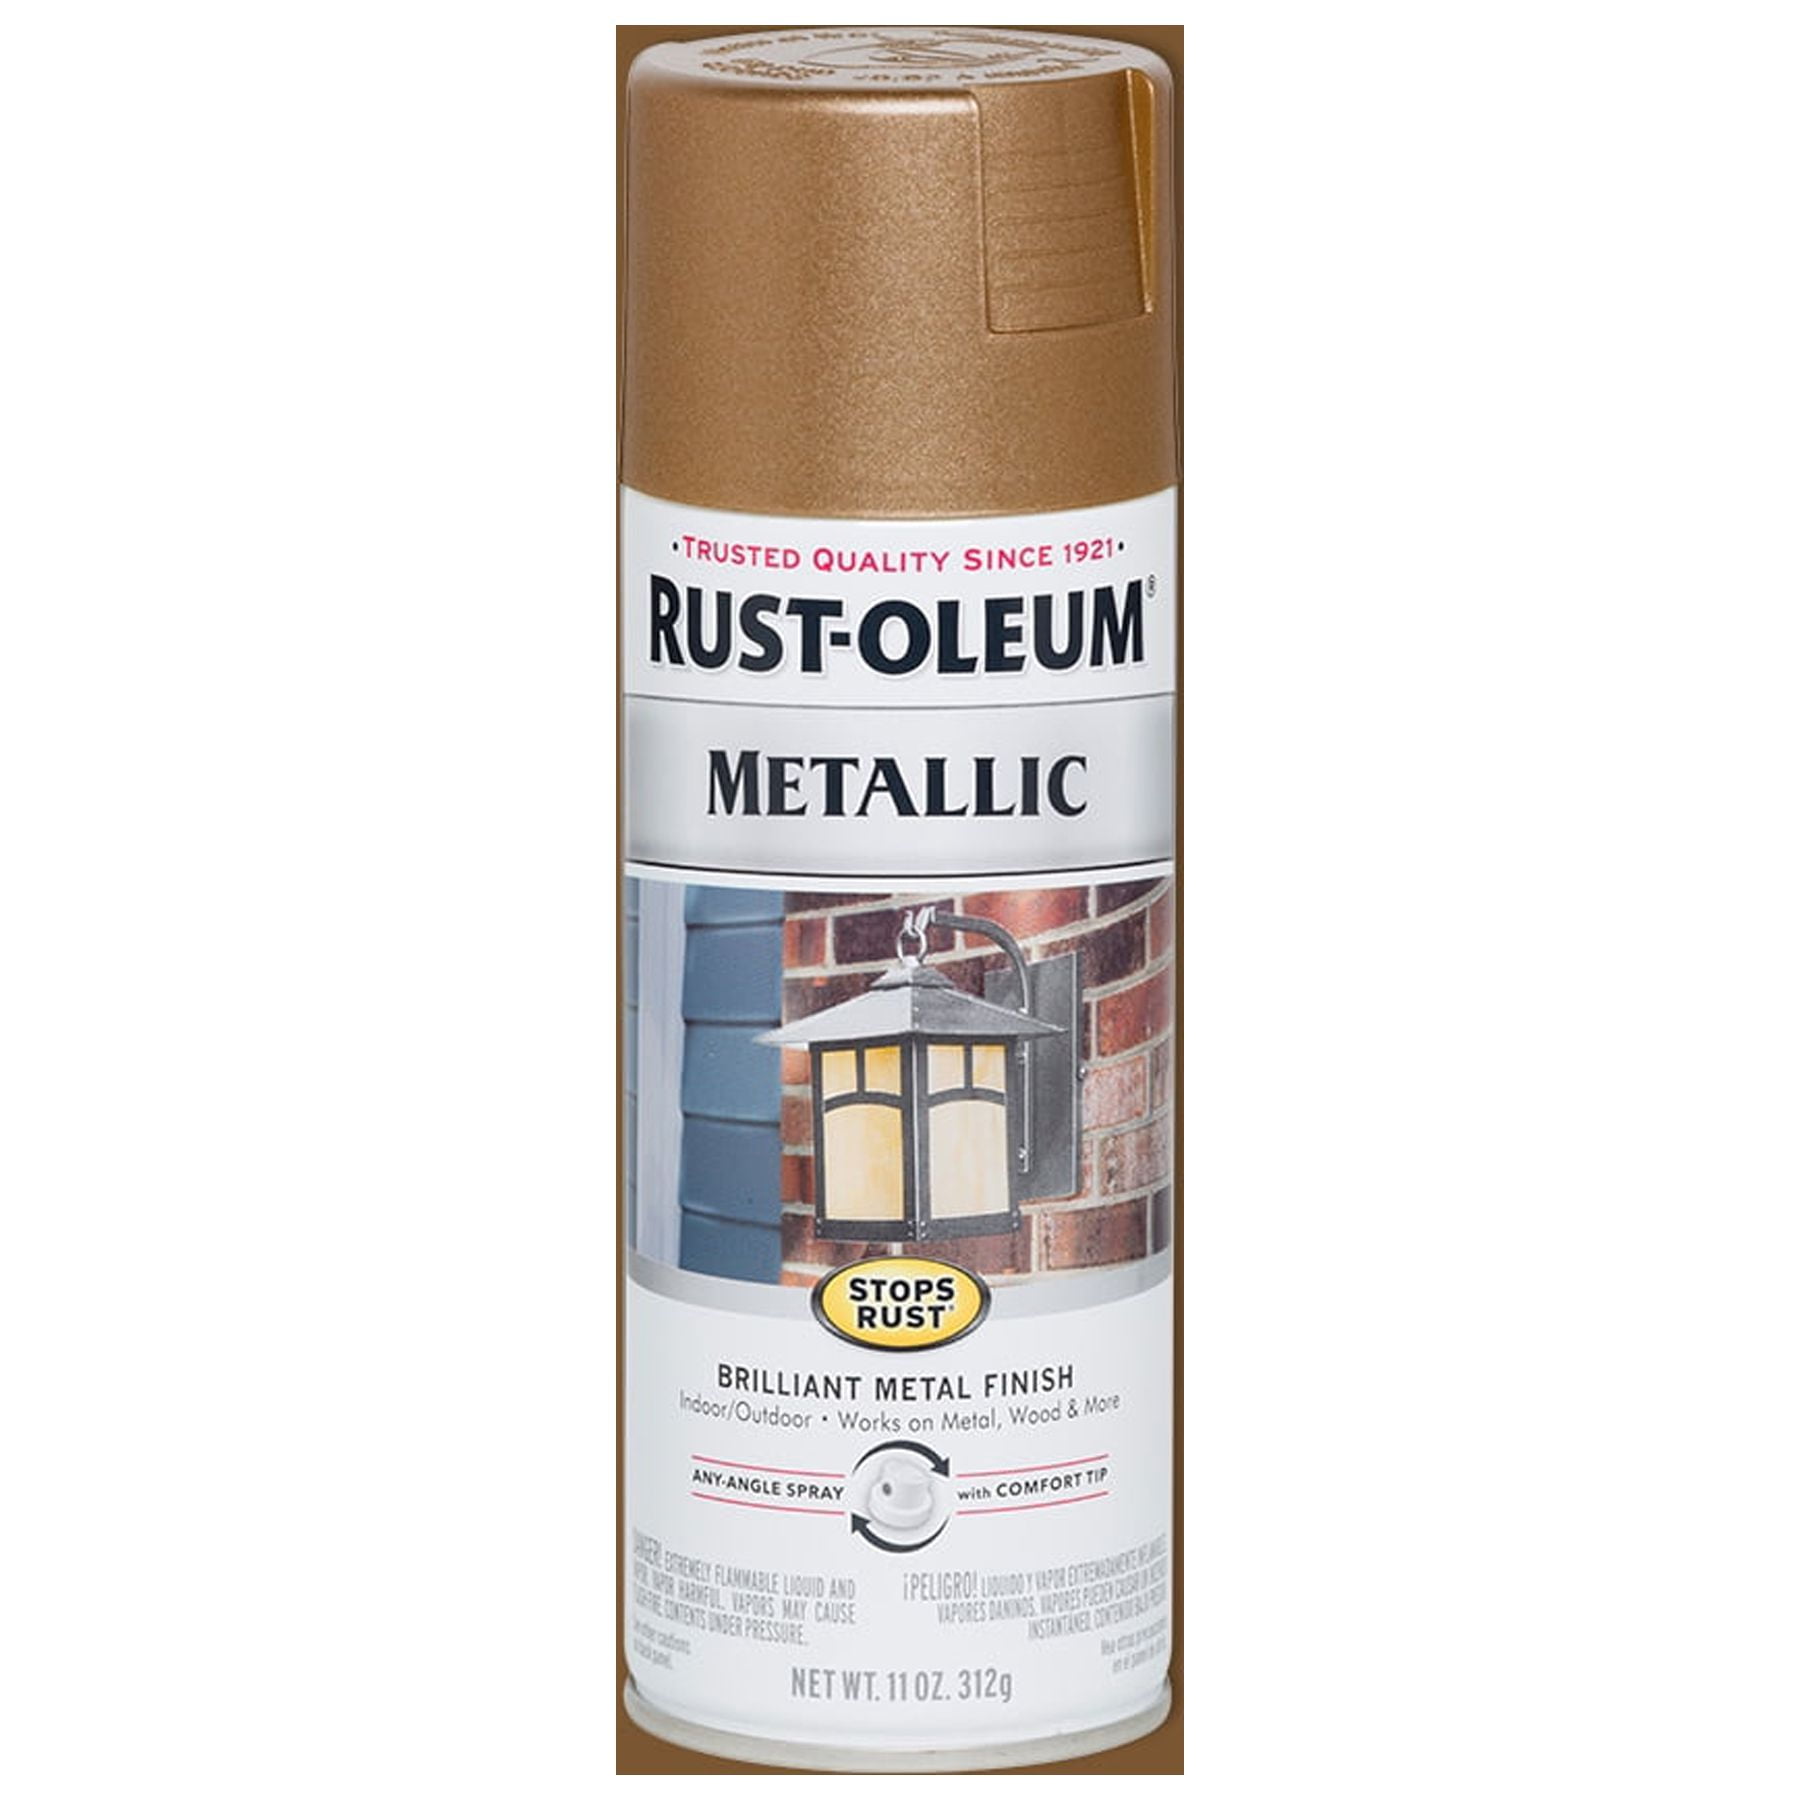 Rust-Oleum Metallic Antique Brass Spray Paint, 11 oz.